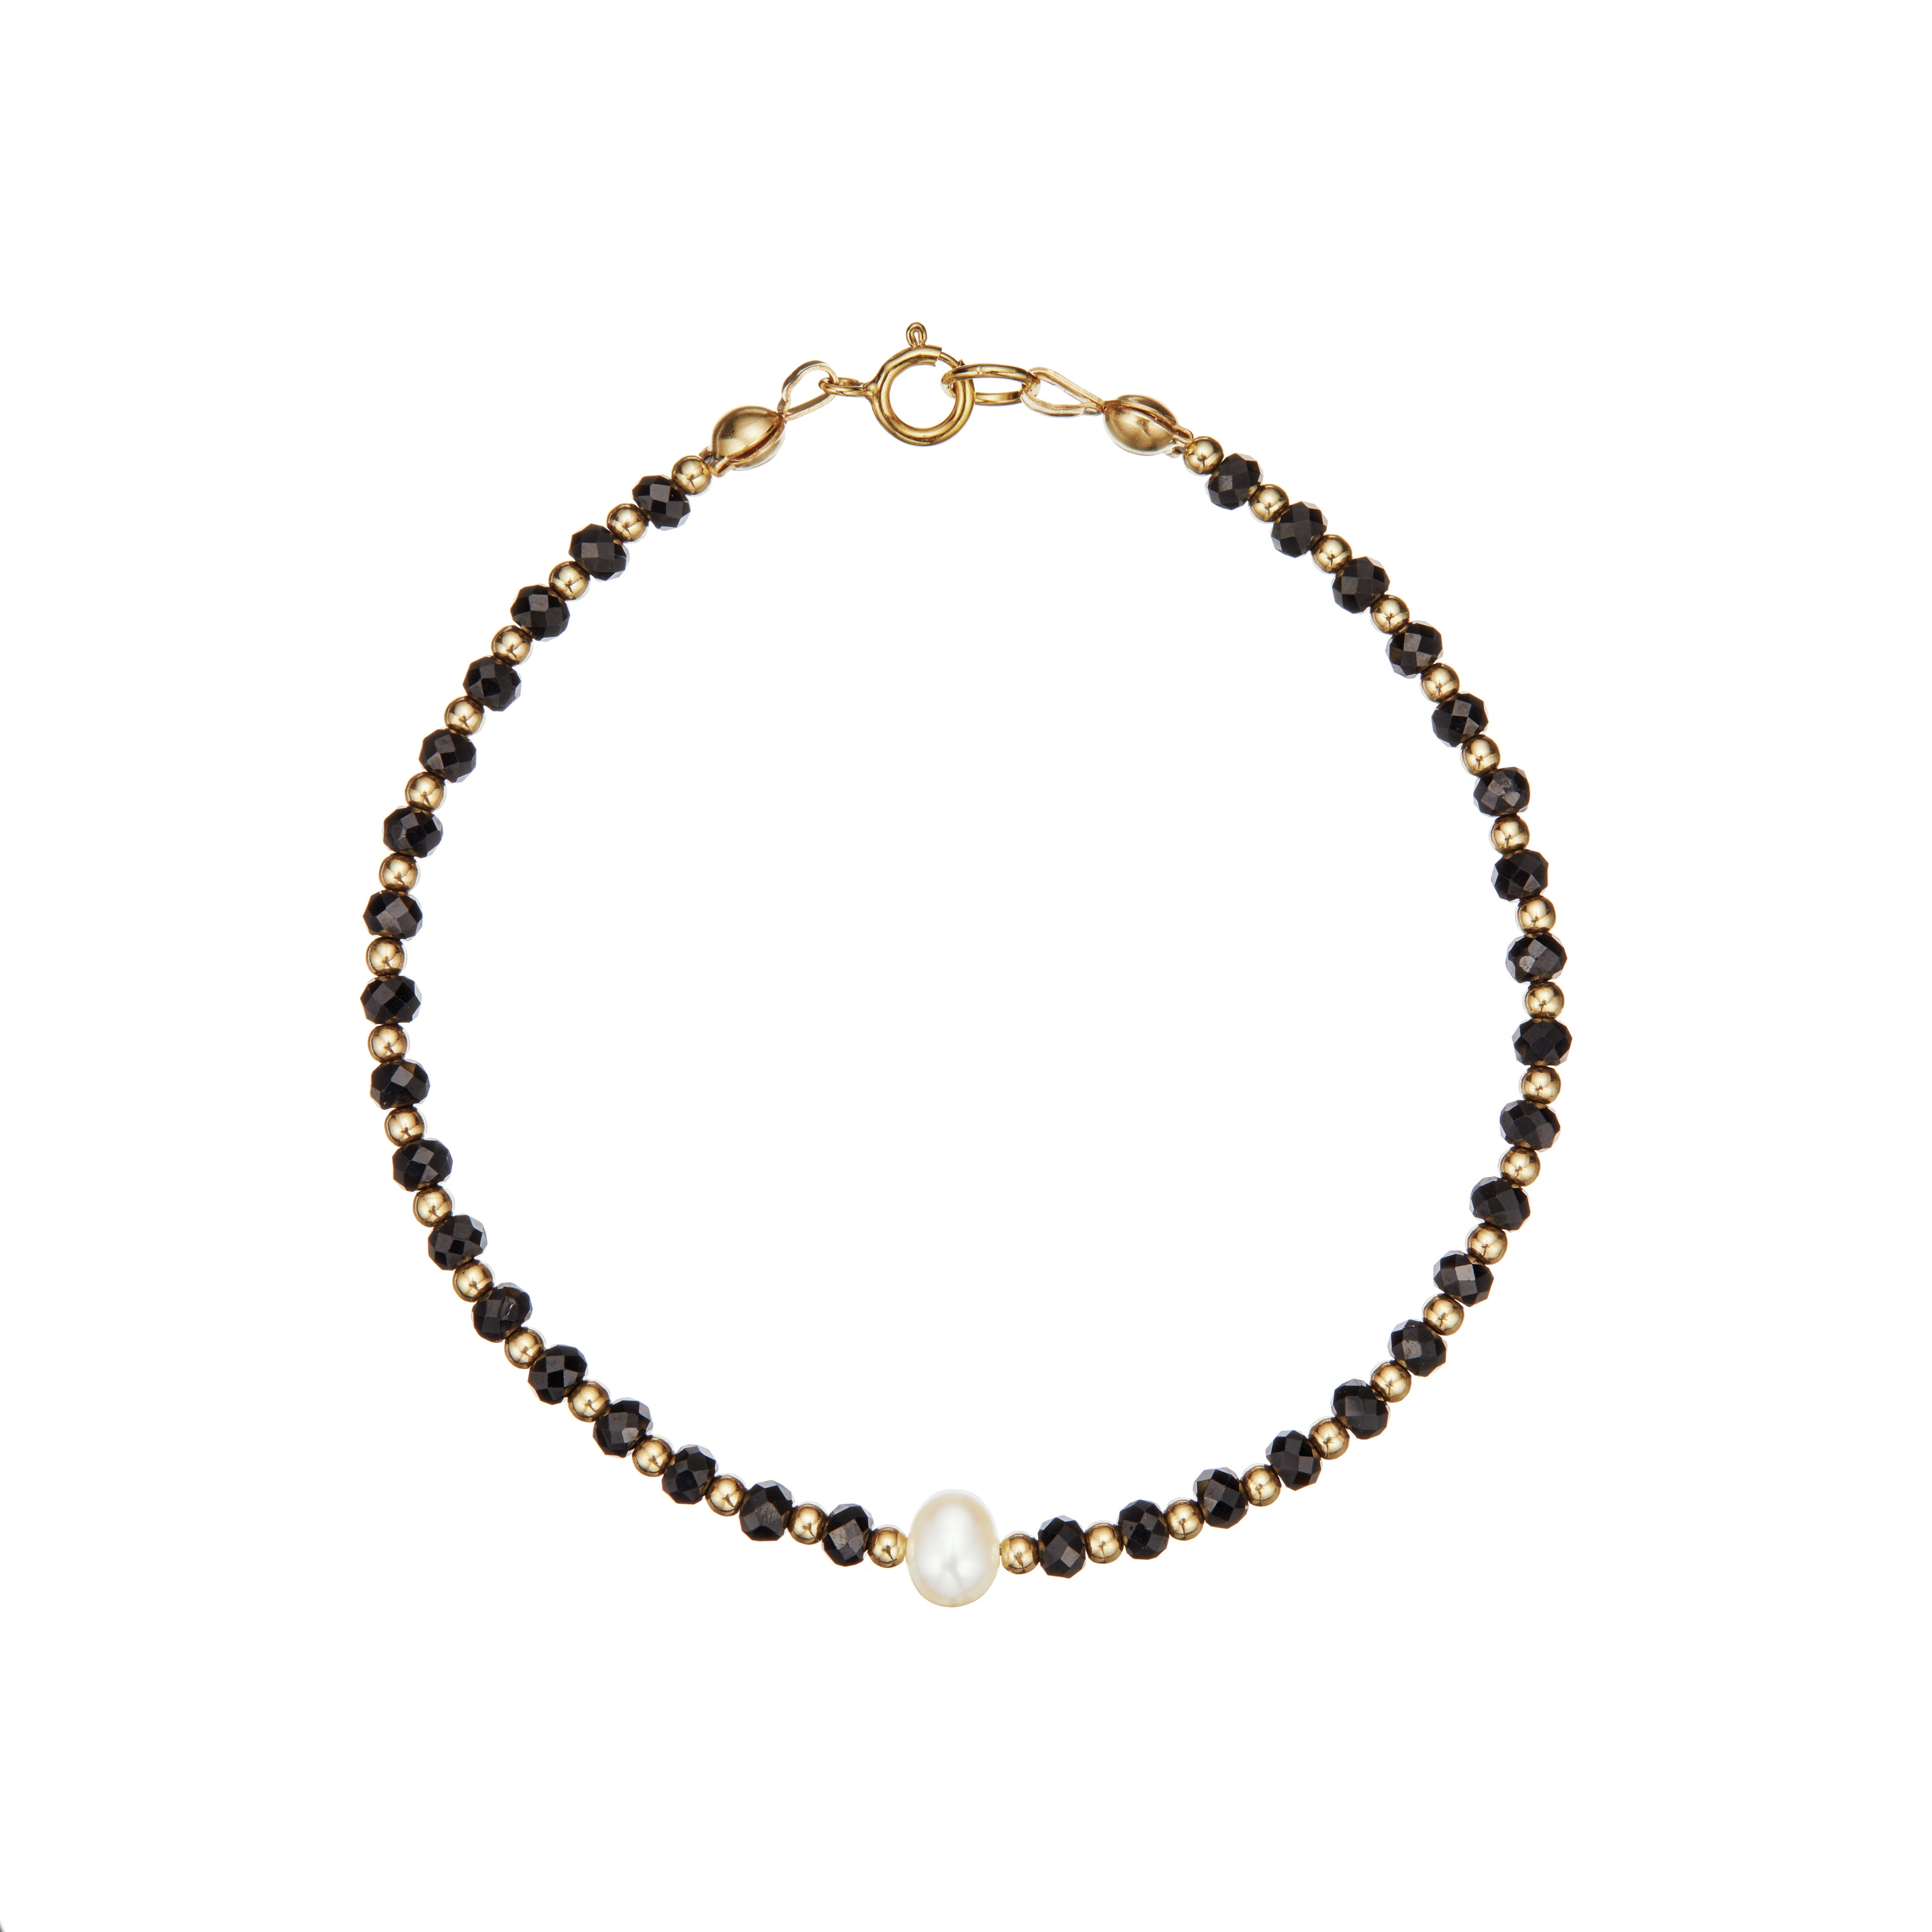 Gold spinel gemstone bracelet on a white background